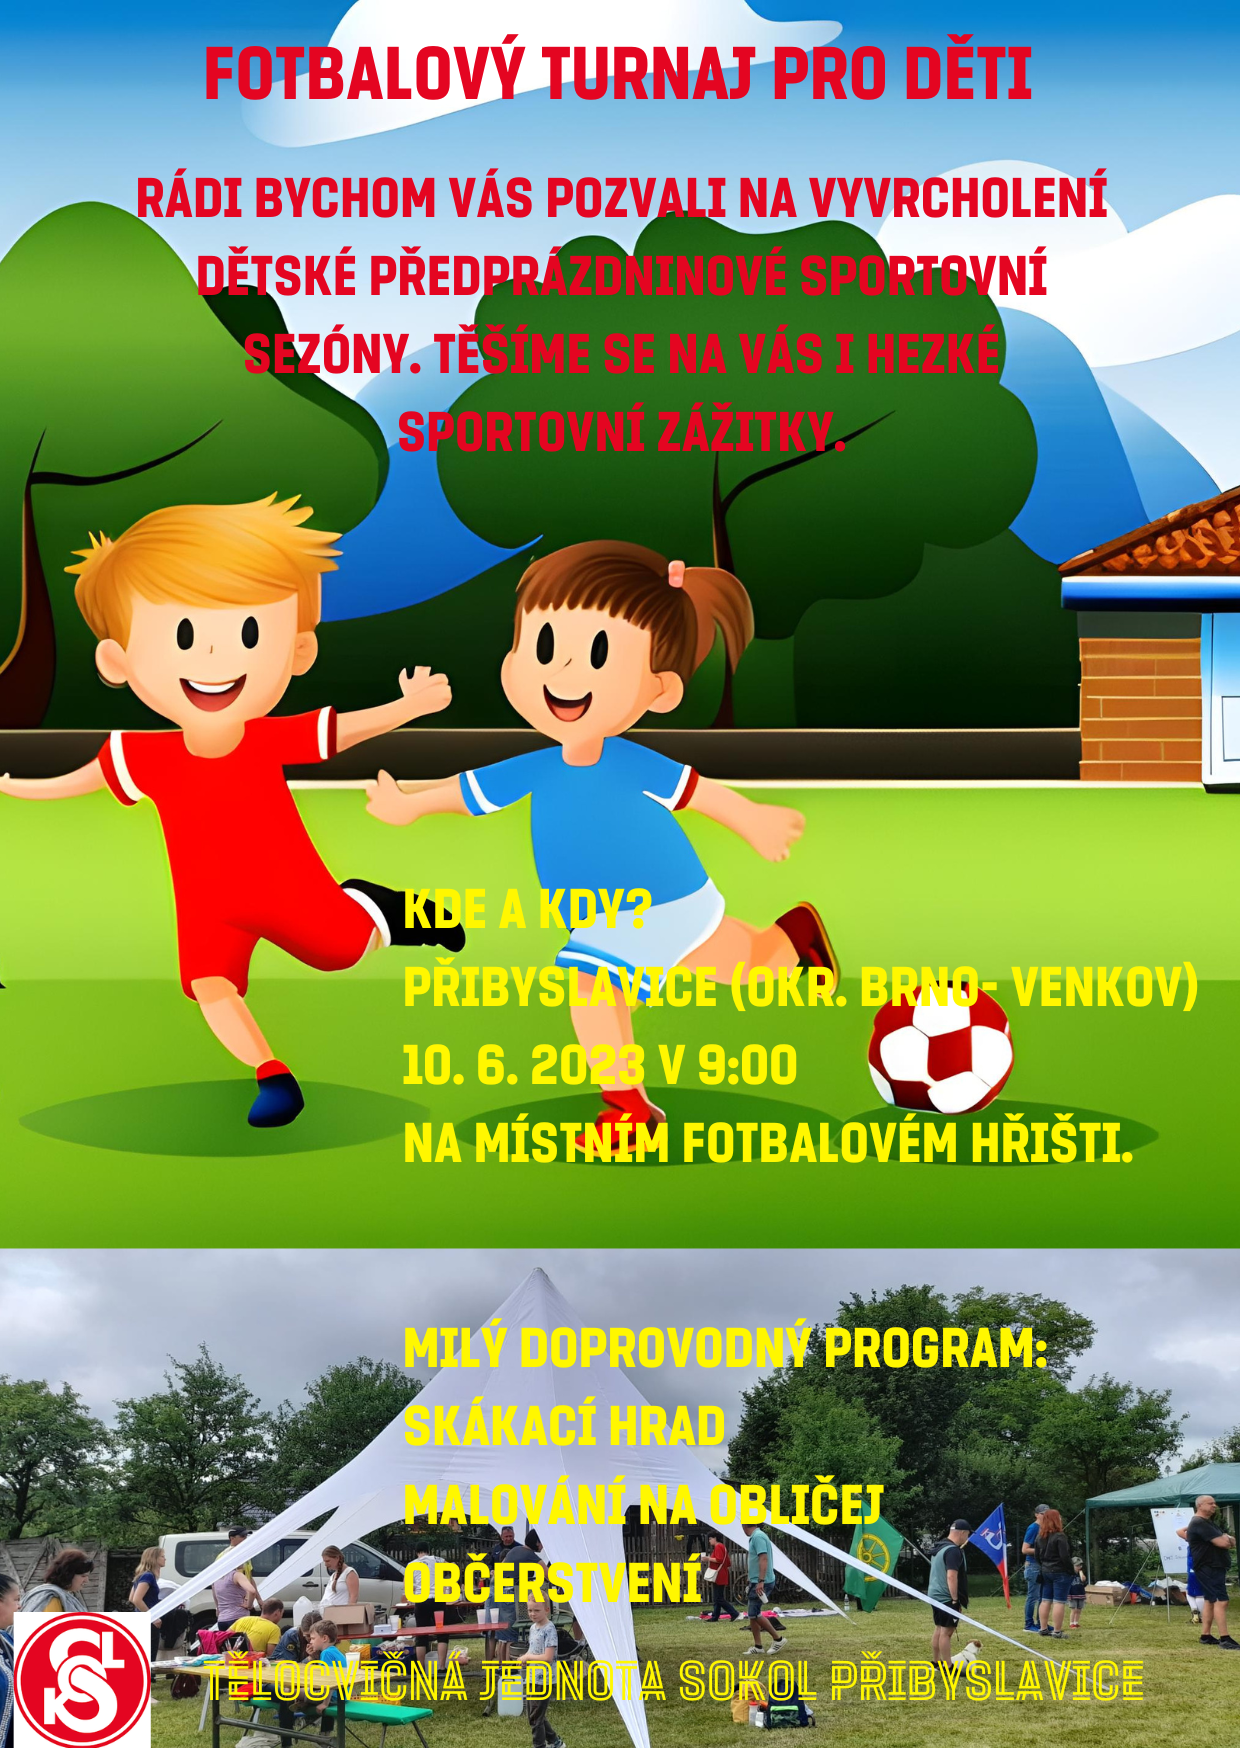 Fotbalový turnaj pro děti. 1